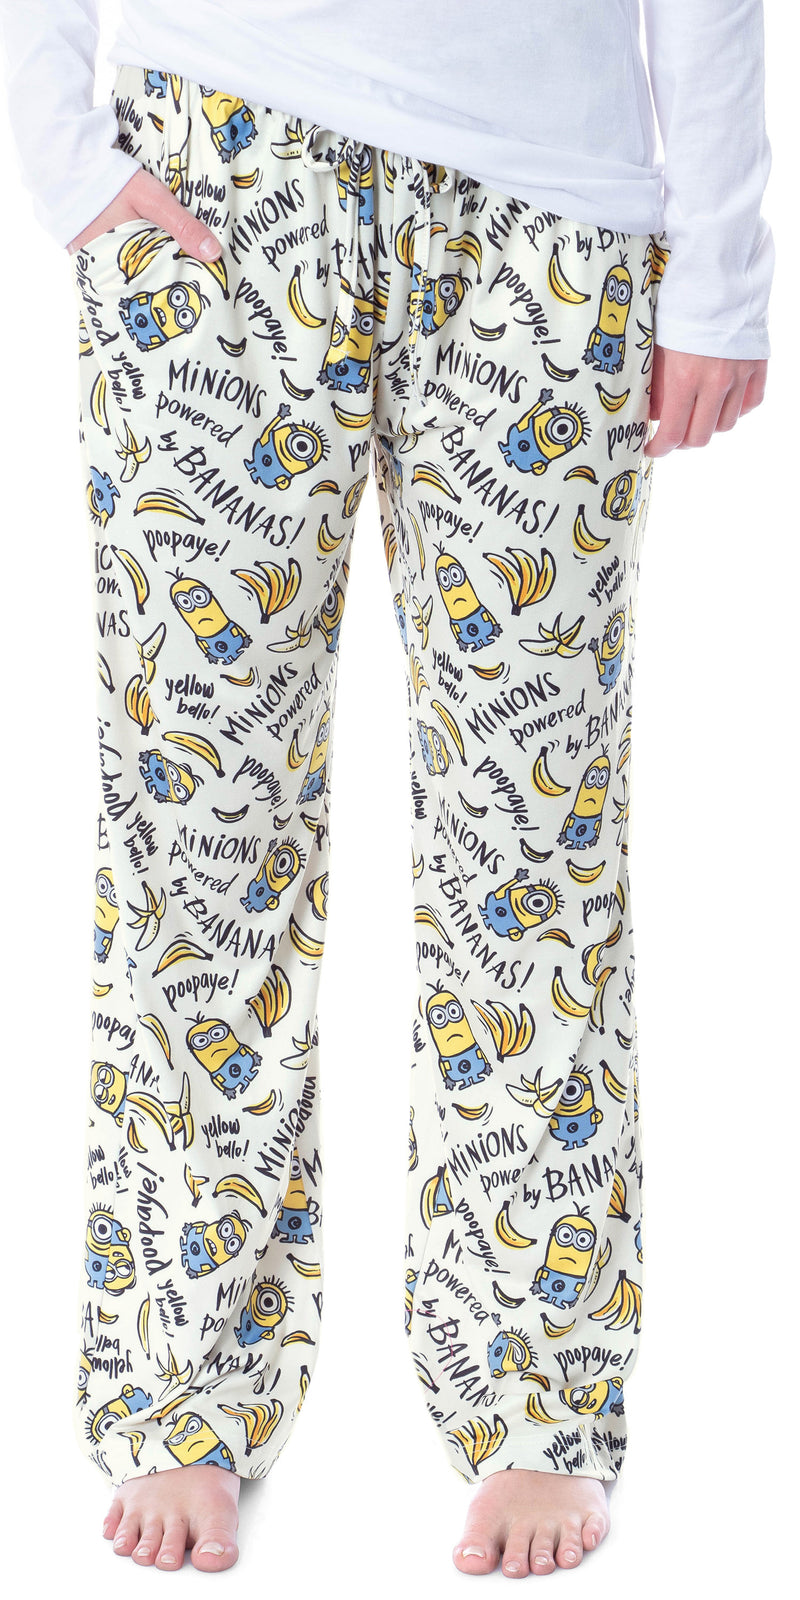 Despicable Me Womens' Minions Powered By Bananas Sleep Pajama Pants